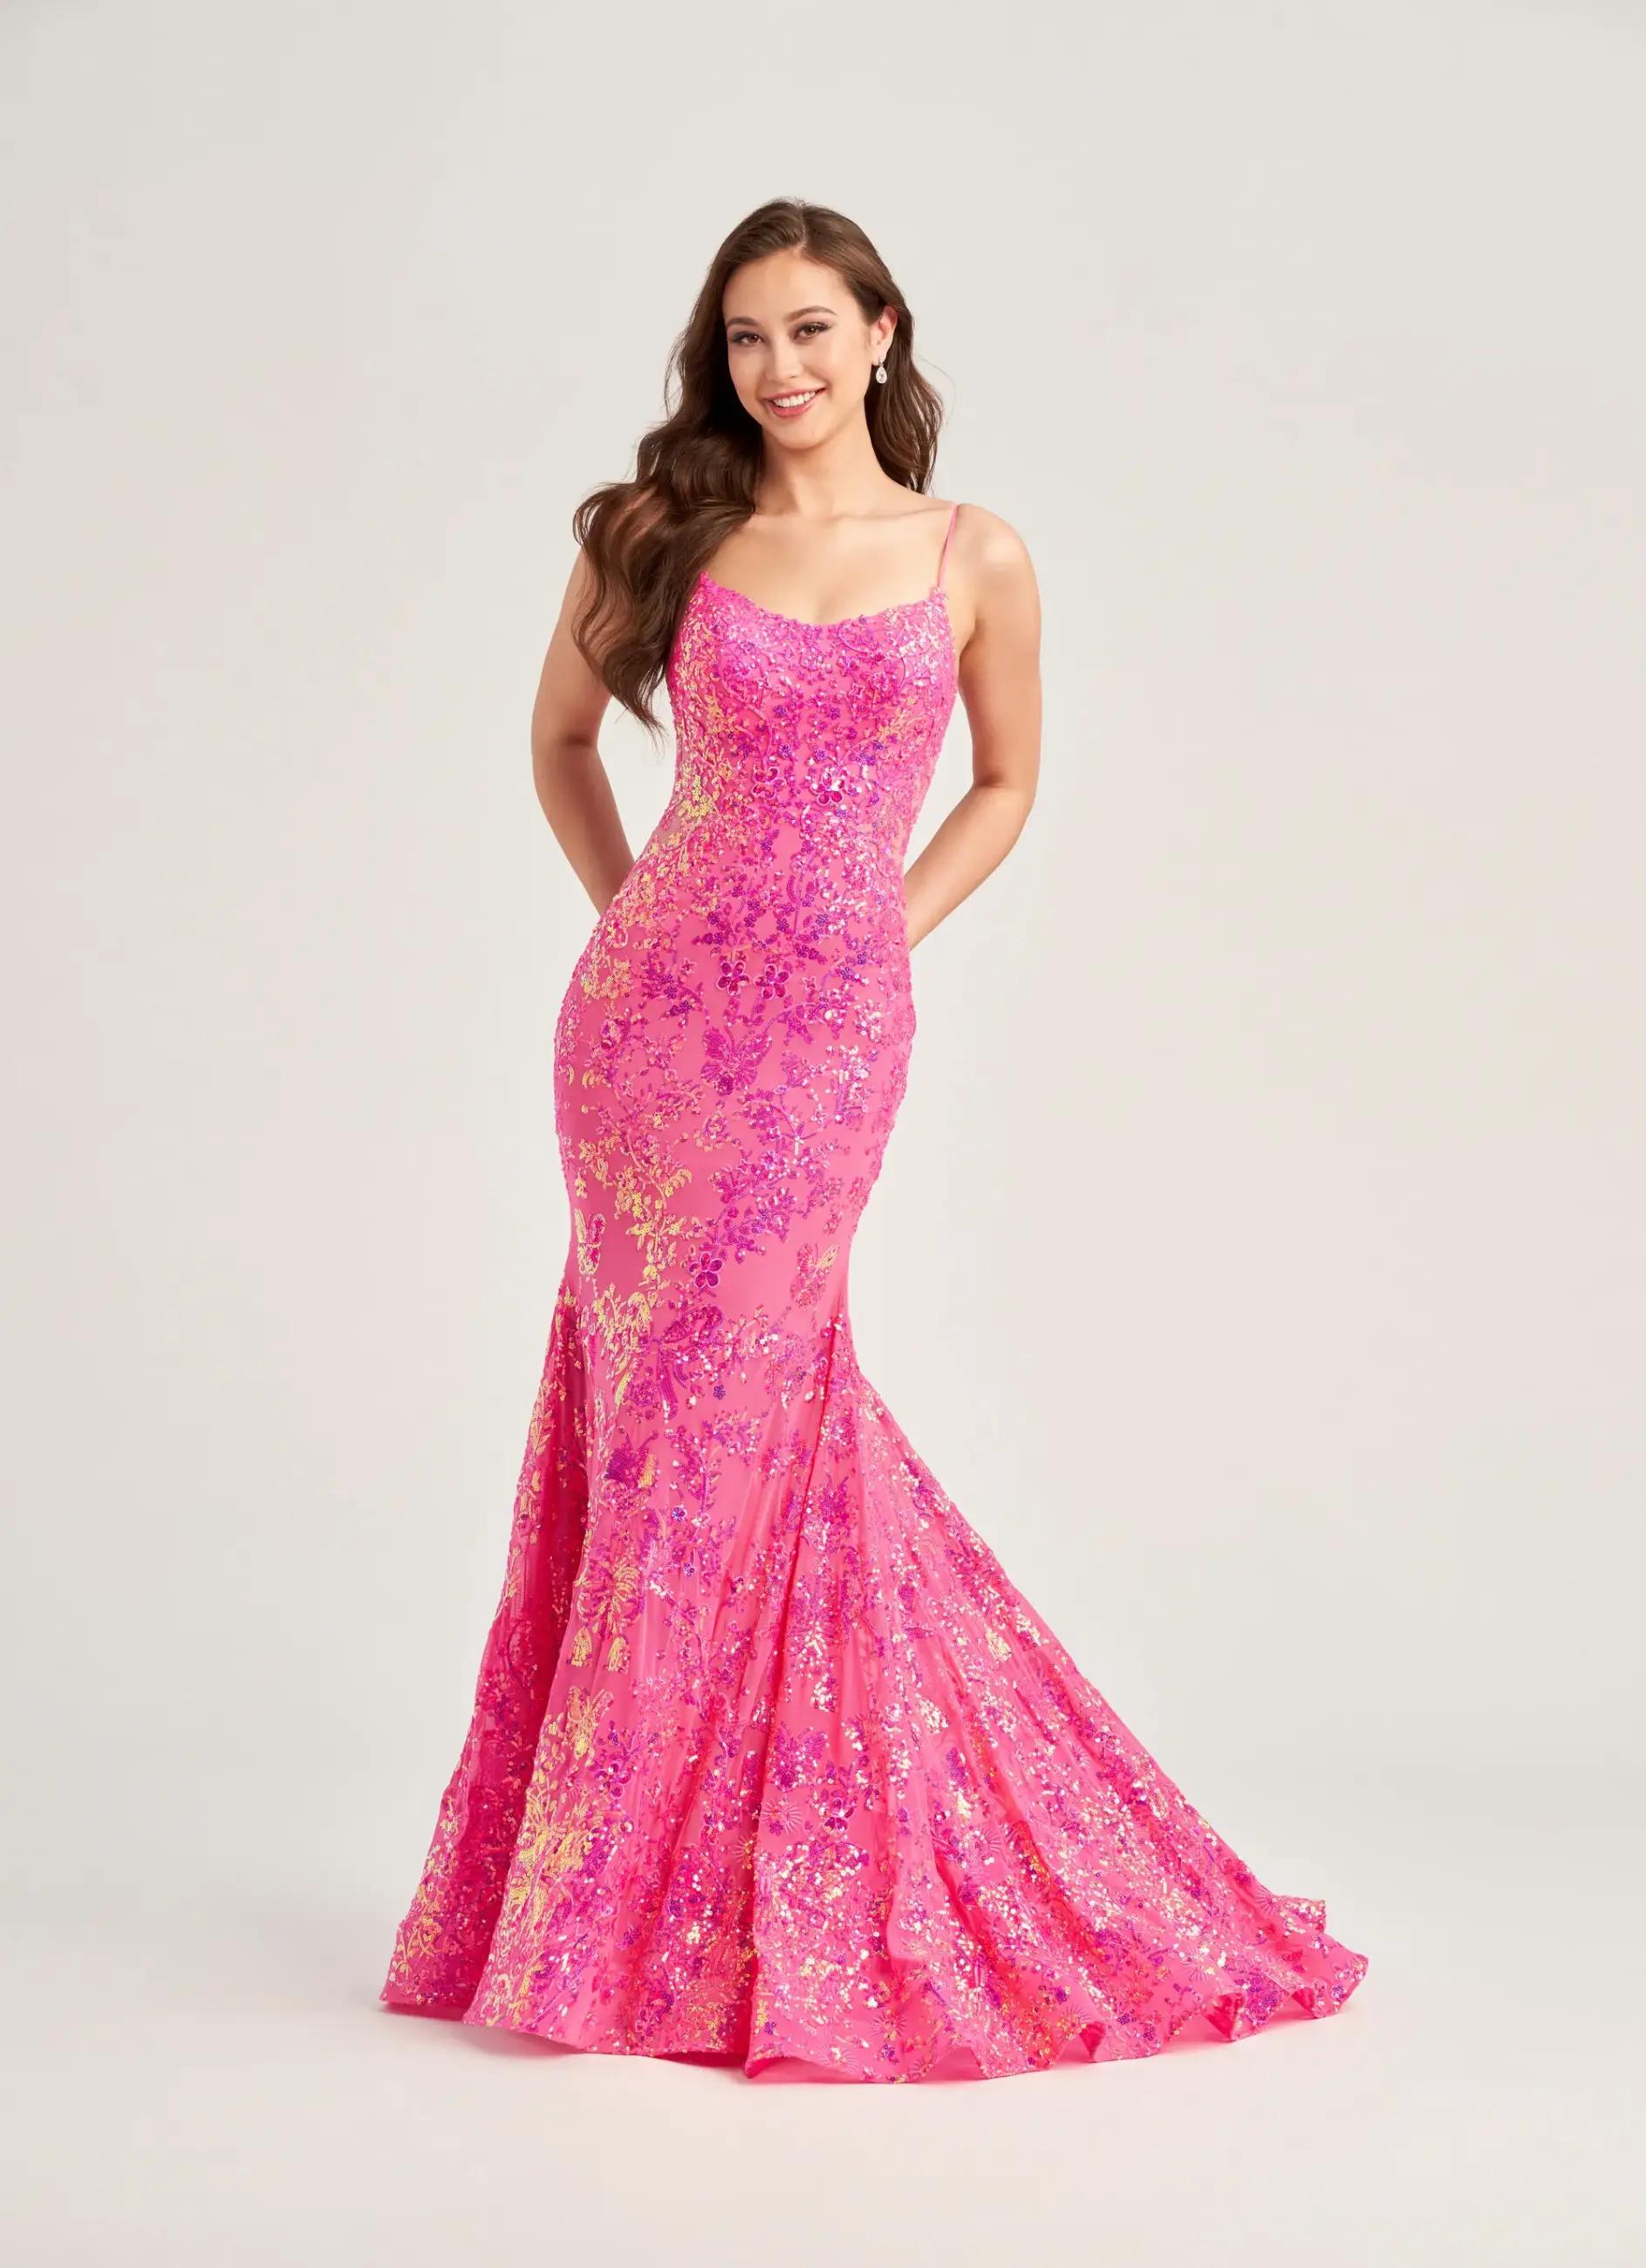 Stylish &amp; Affordable Prom Dresses at Nikki&#39;s Boutique Image